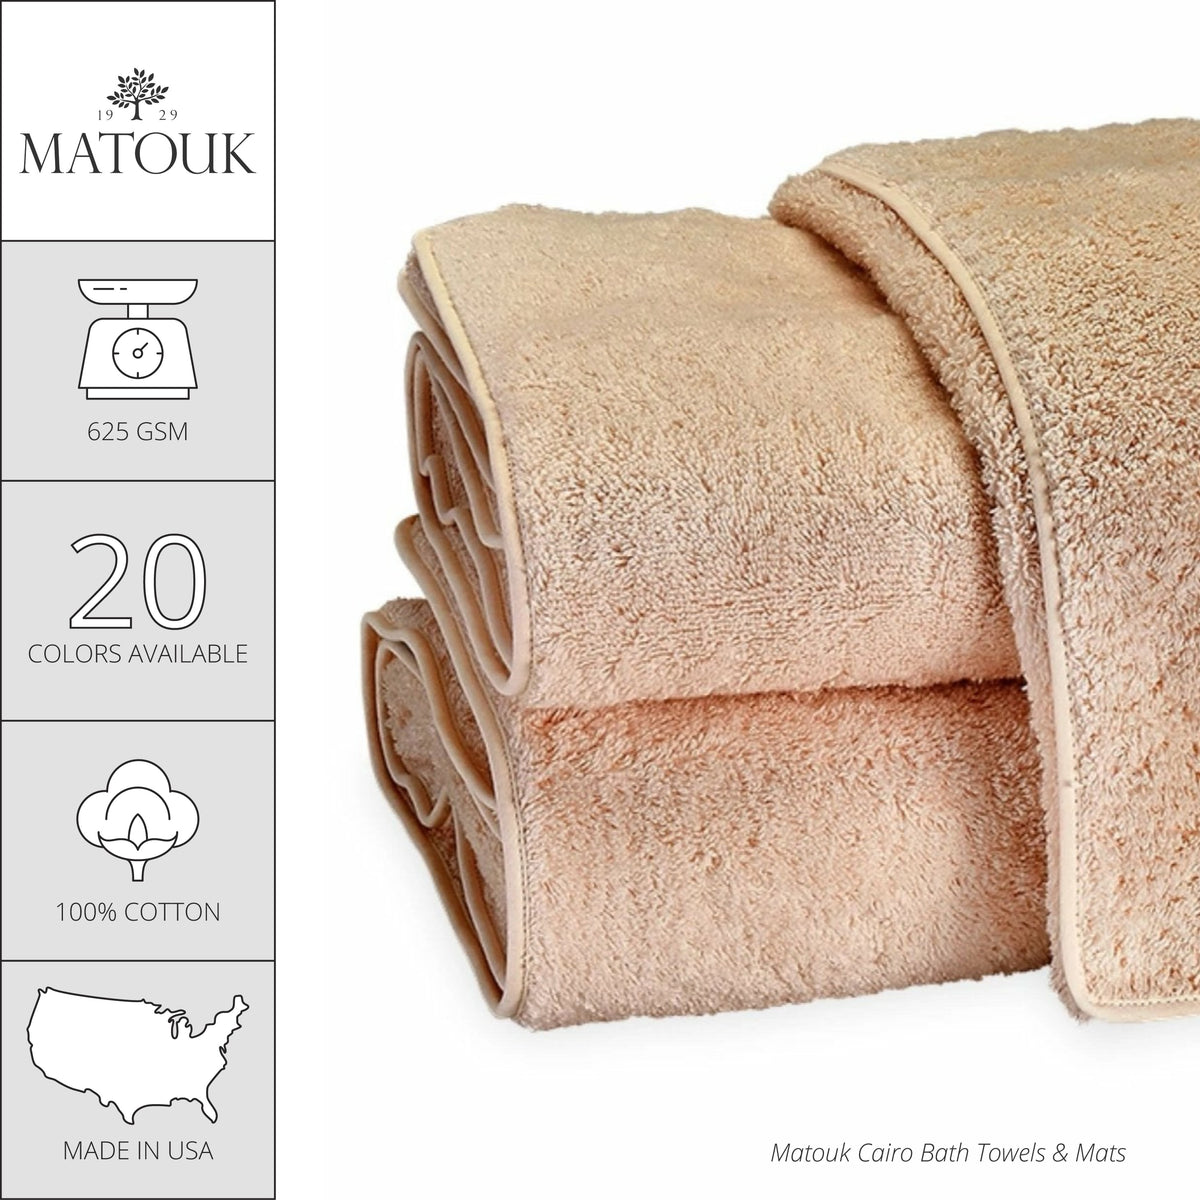 Matouk Cairo Bath Towels and Mats - White/Linen